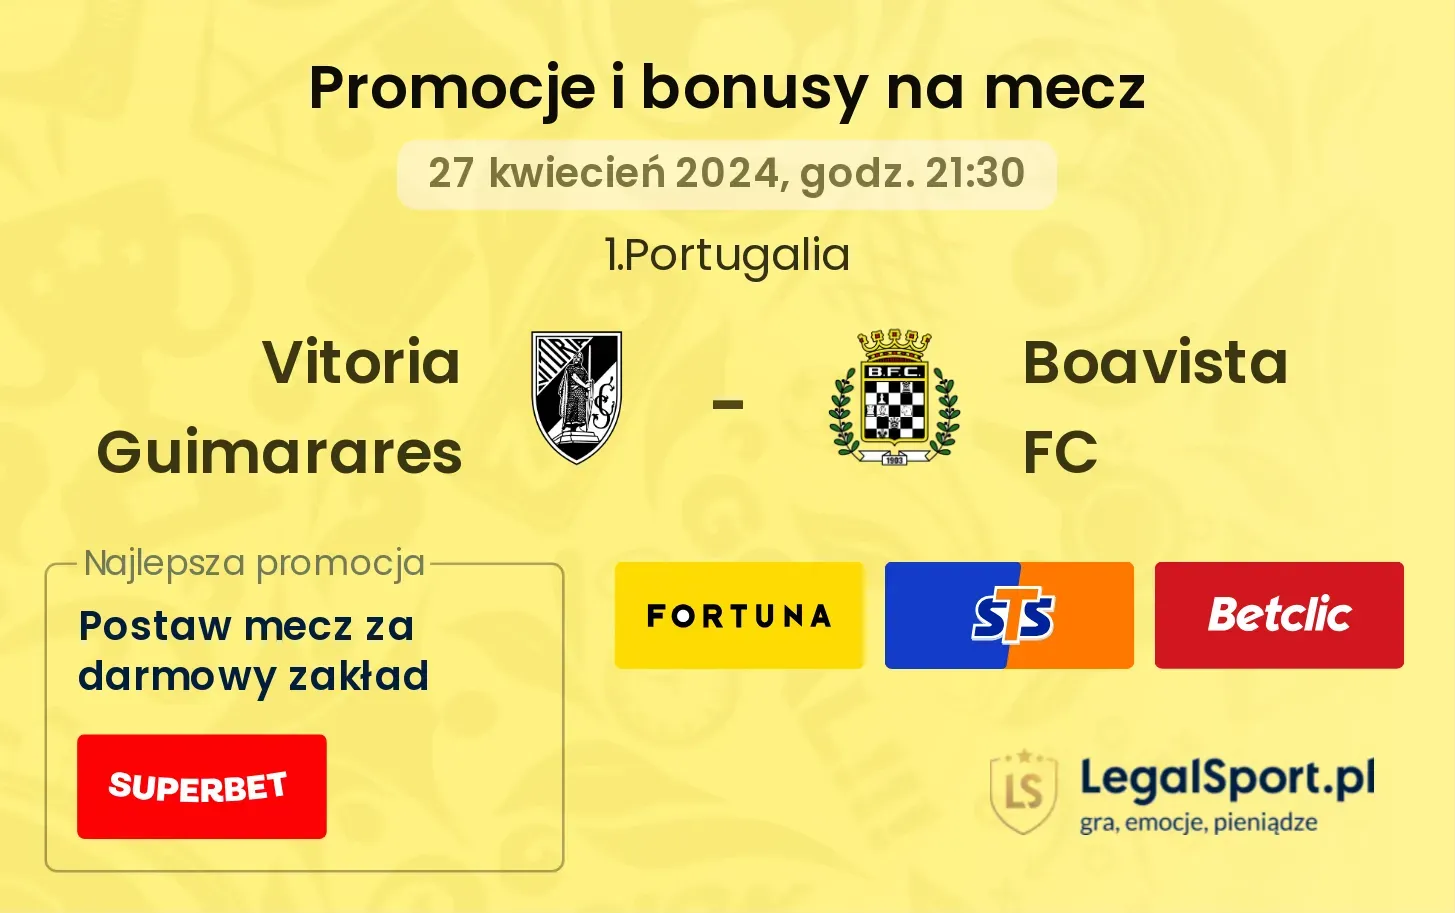 Vitoria Guimarares - Boavista FC promocje bonusy na mecz